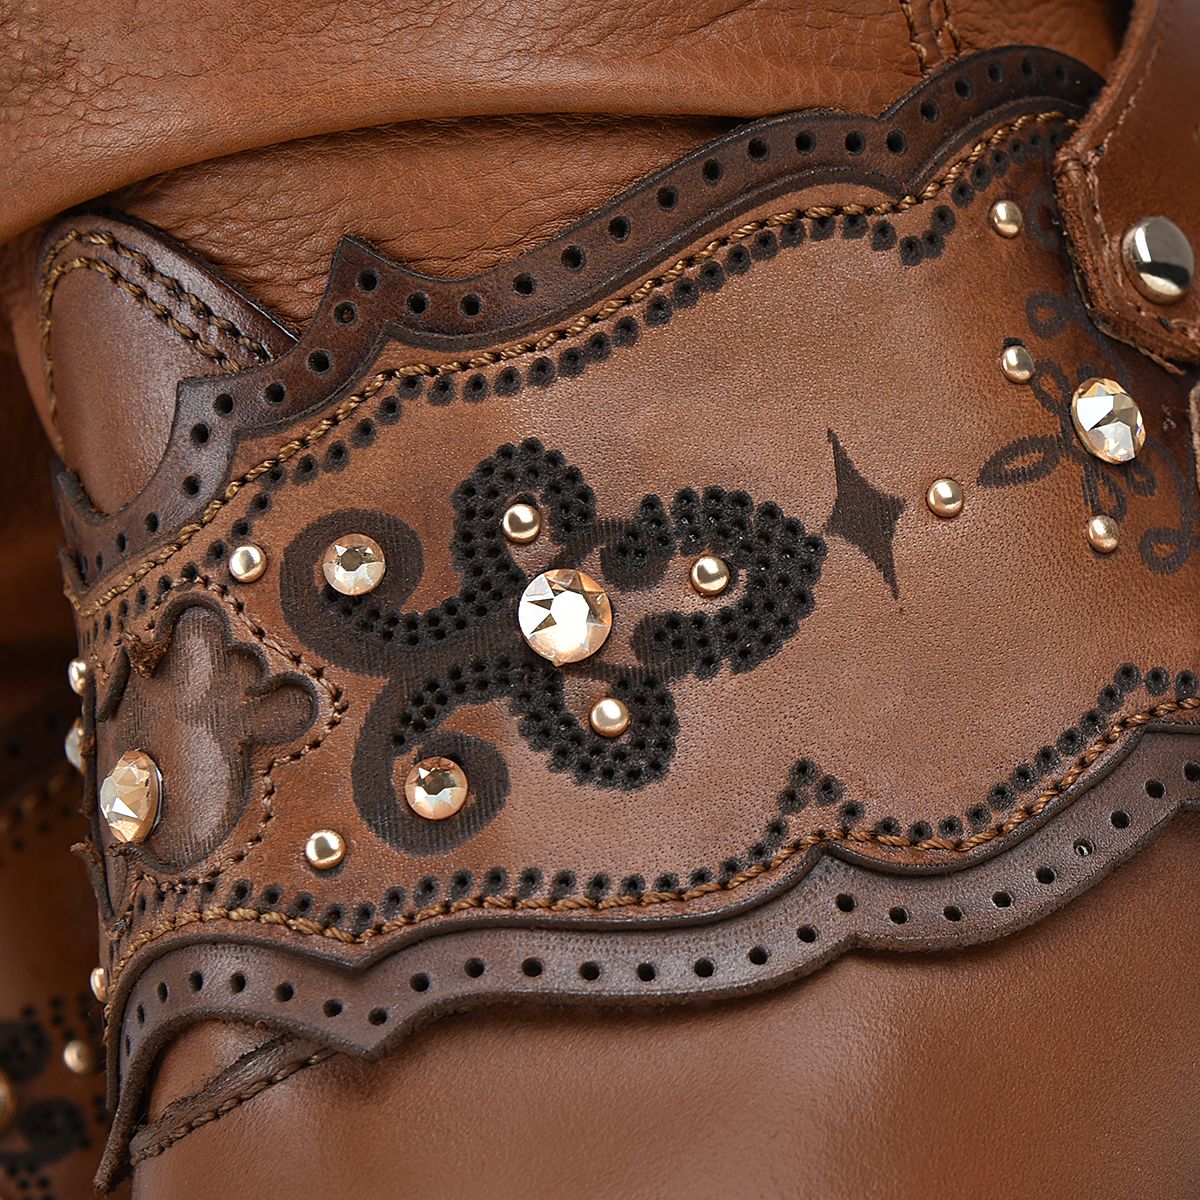 1Z41RS - Cuadra Golden casual fashion cowboy leather boots for women-CUADRA-Kuet-Cuadra-Boots